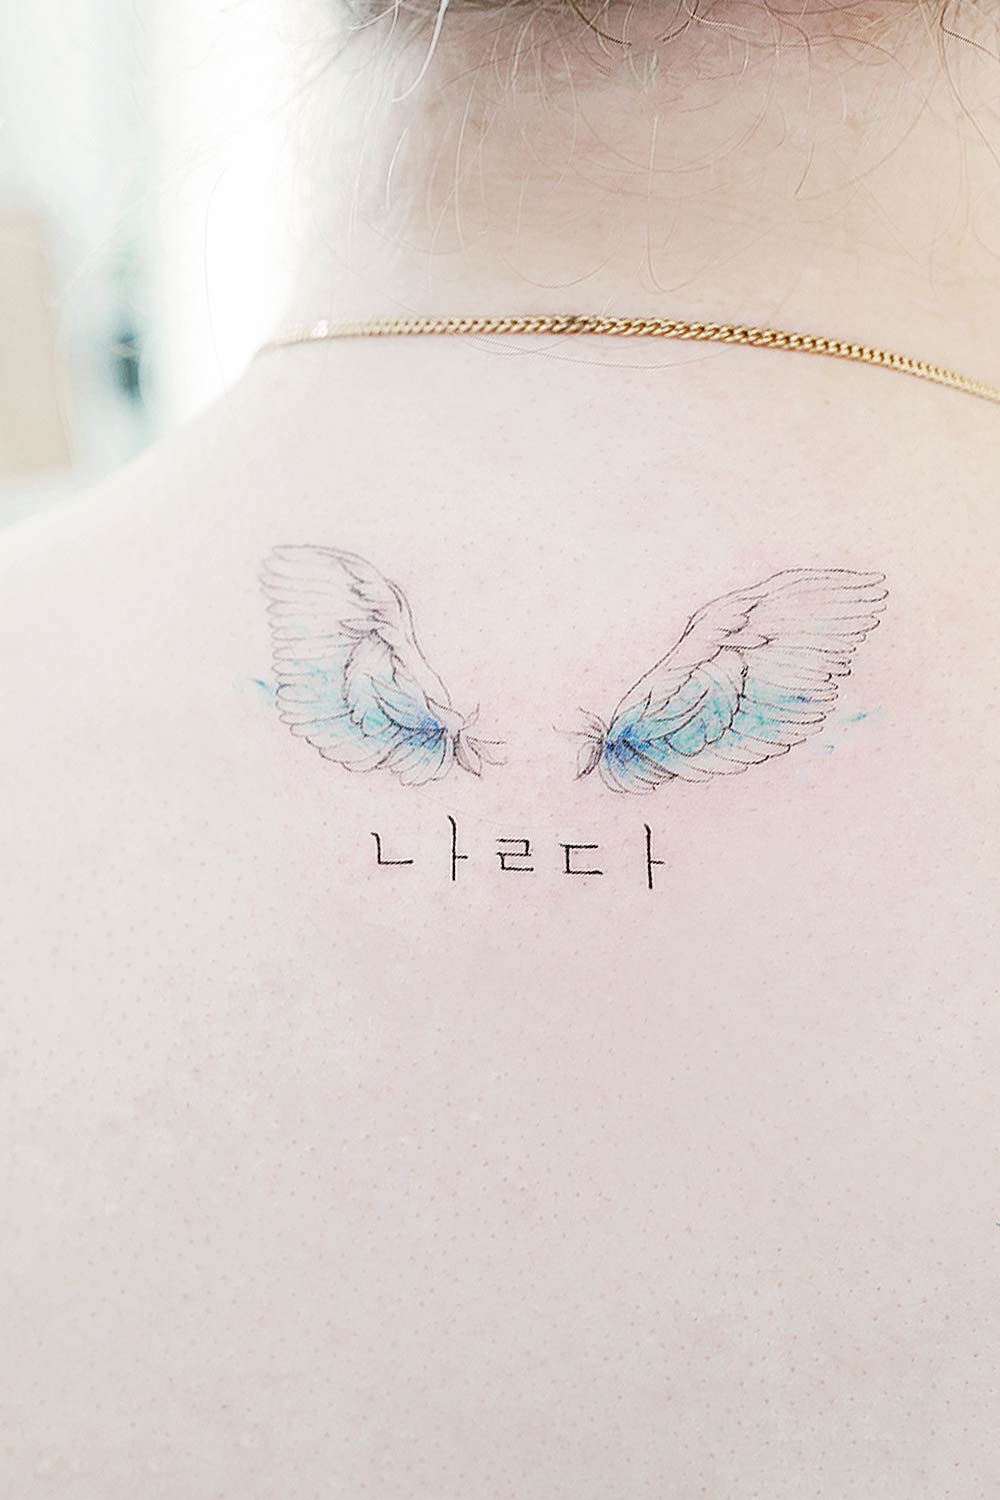 Angel Wings Back Tattoo Design